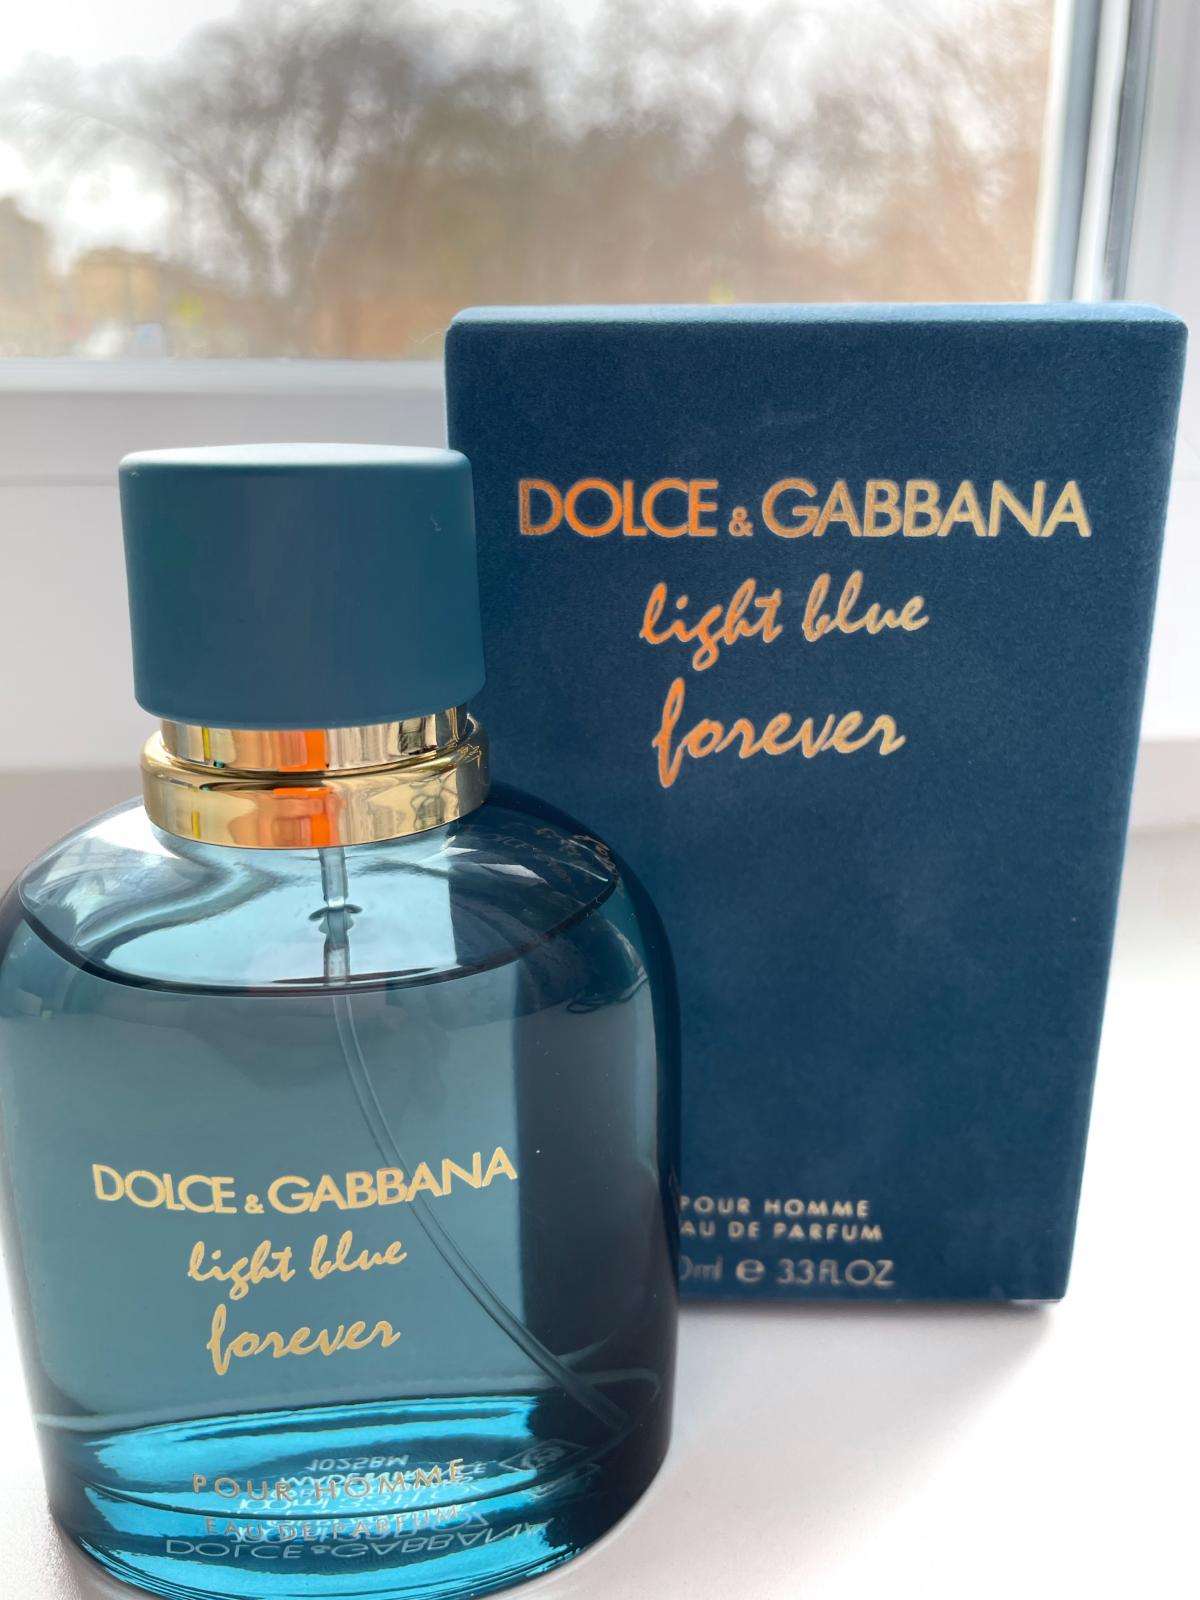 Dolce gabbana light blue forever homme. Dolce Gabbana Light Blue Forever pour homme. Dolce & Gabbana Light Blue Forever pour homme EDP, 100 ml. Лайт Блю Форевер Дольче Габбана 100 мл. Дольче Габбана Лайт Блю Форевер.